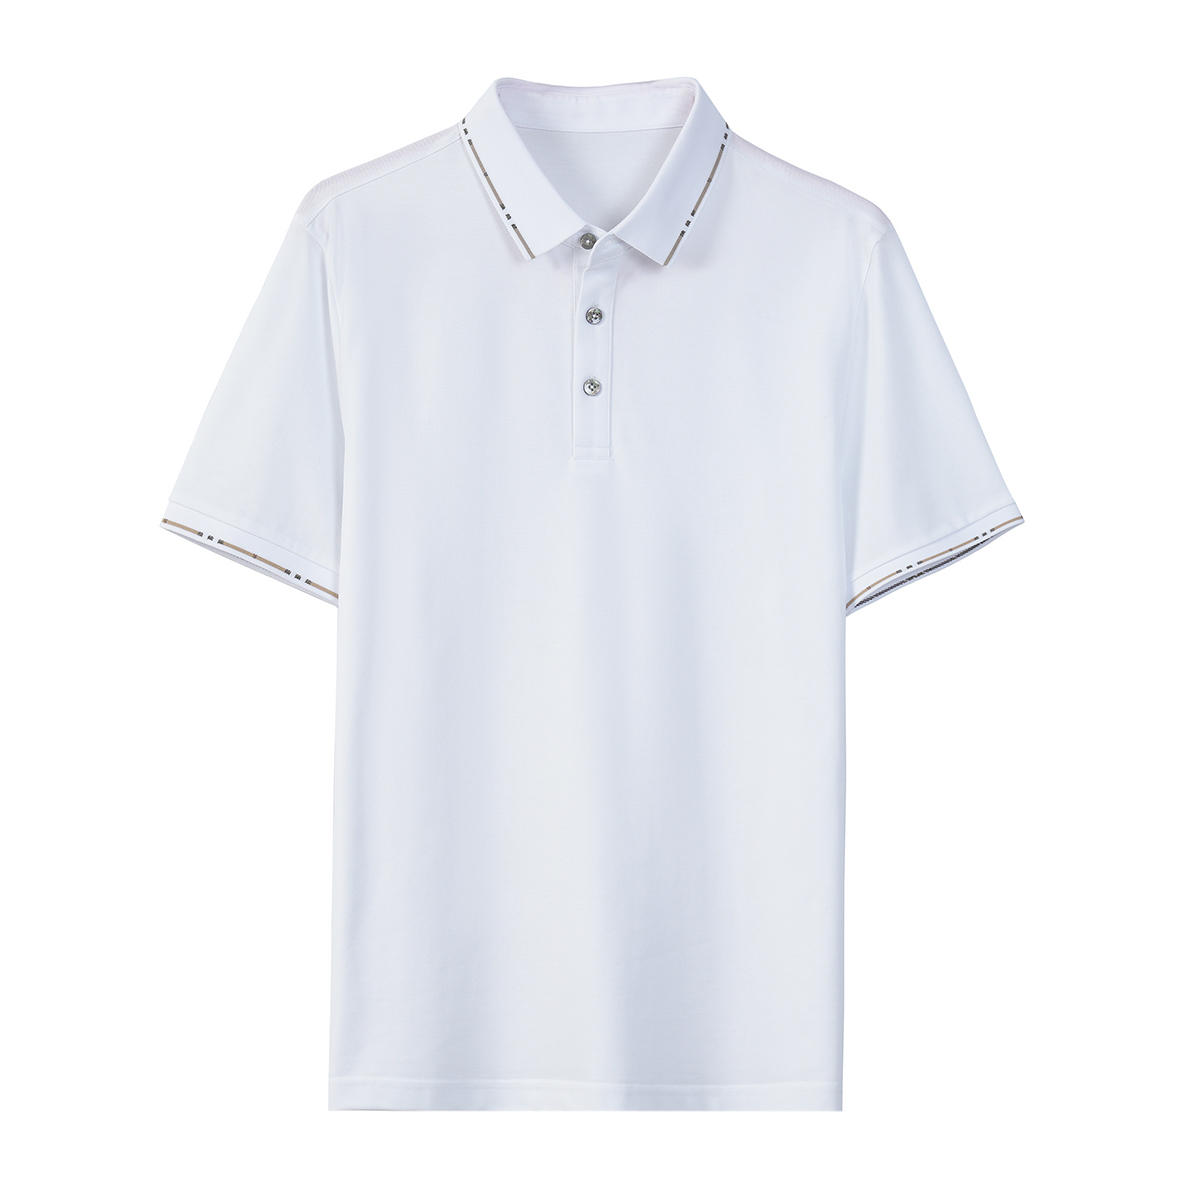 Men's Striped Cotton Shirt1